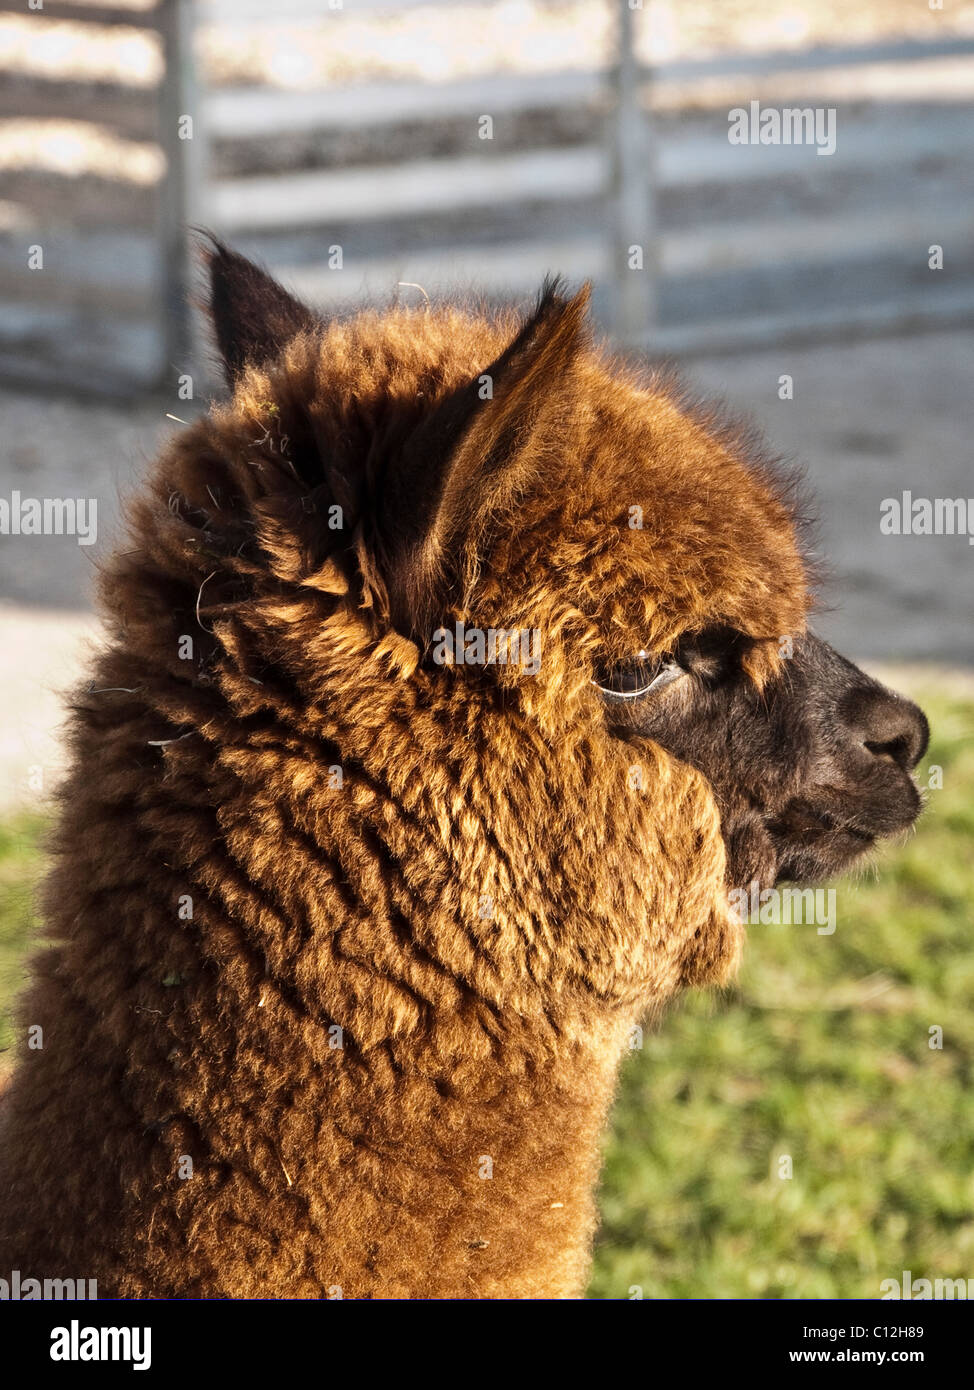 Close up of Alpaca - Vicugna pacos, a domesticated South American camelid - on an alpaca farm. Stock Photo